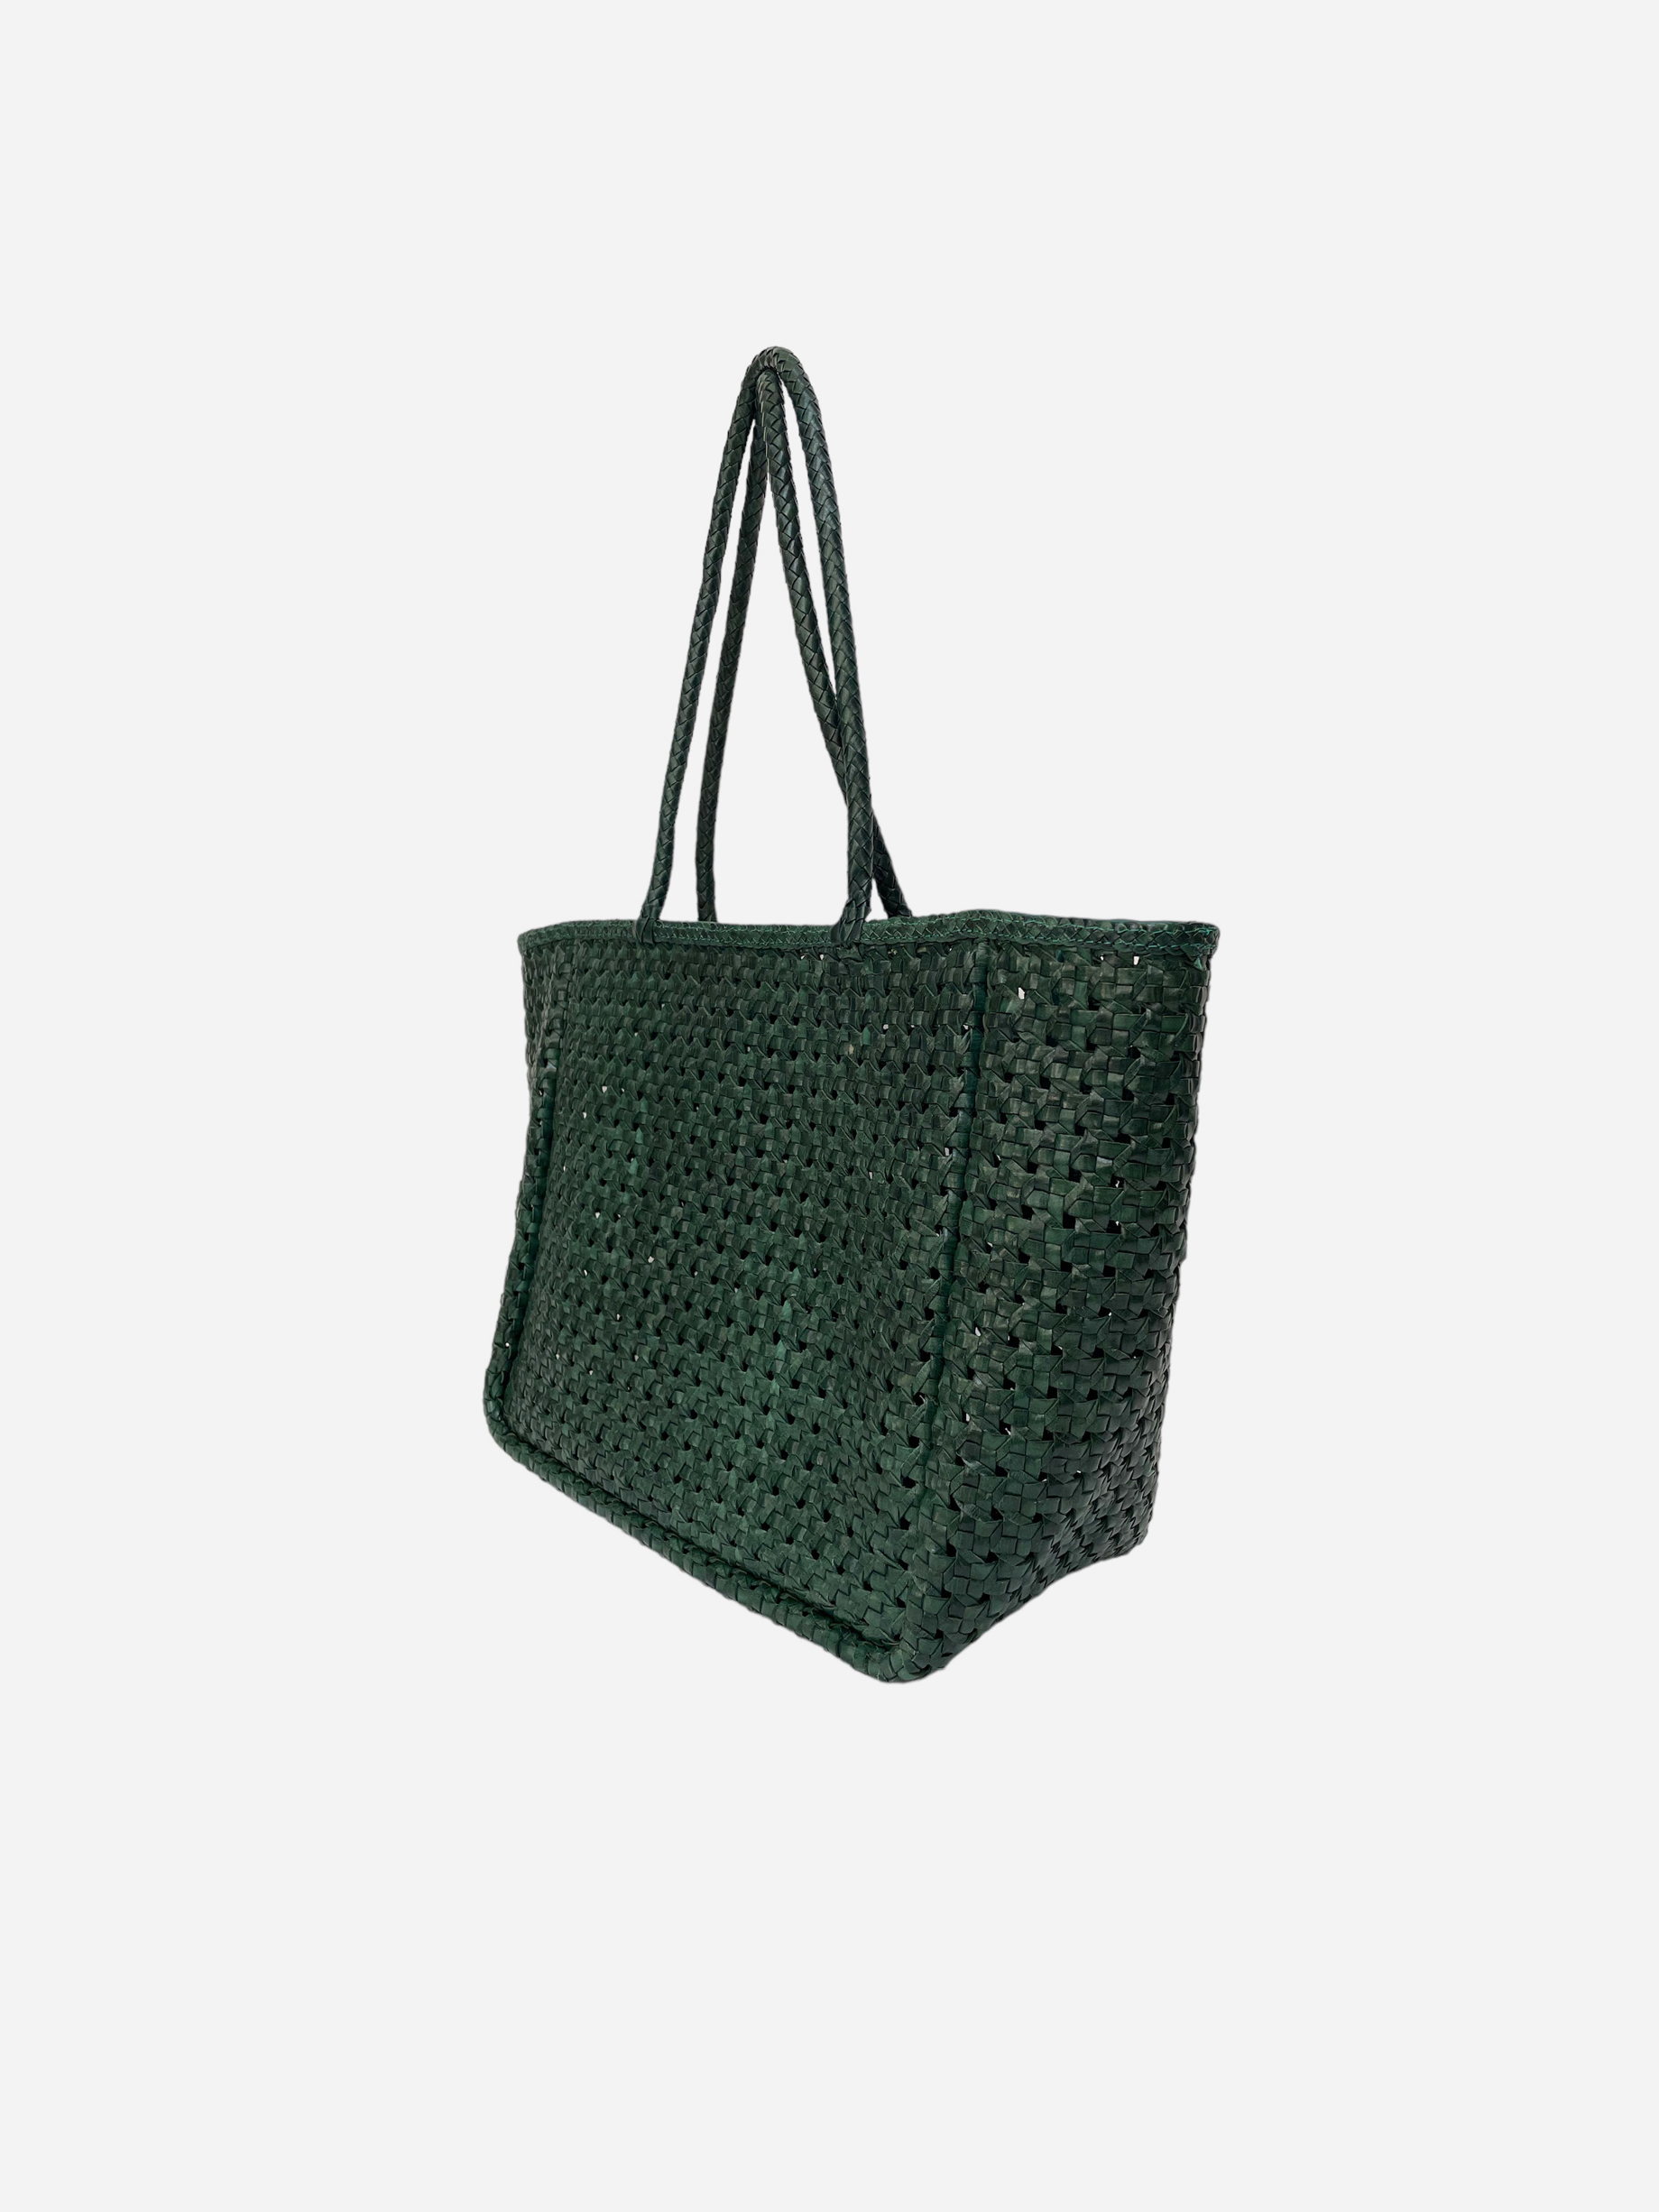 MNH-PS-ANNETTE-CUIR-FORET-green-leather-woven-handmade-shoulder-bag-maison-nh-paris-matchboxathens